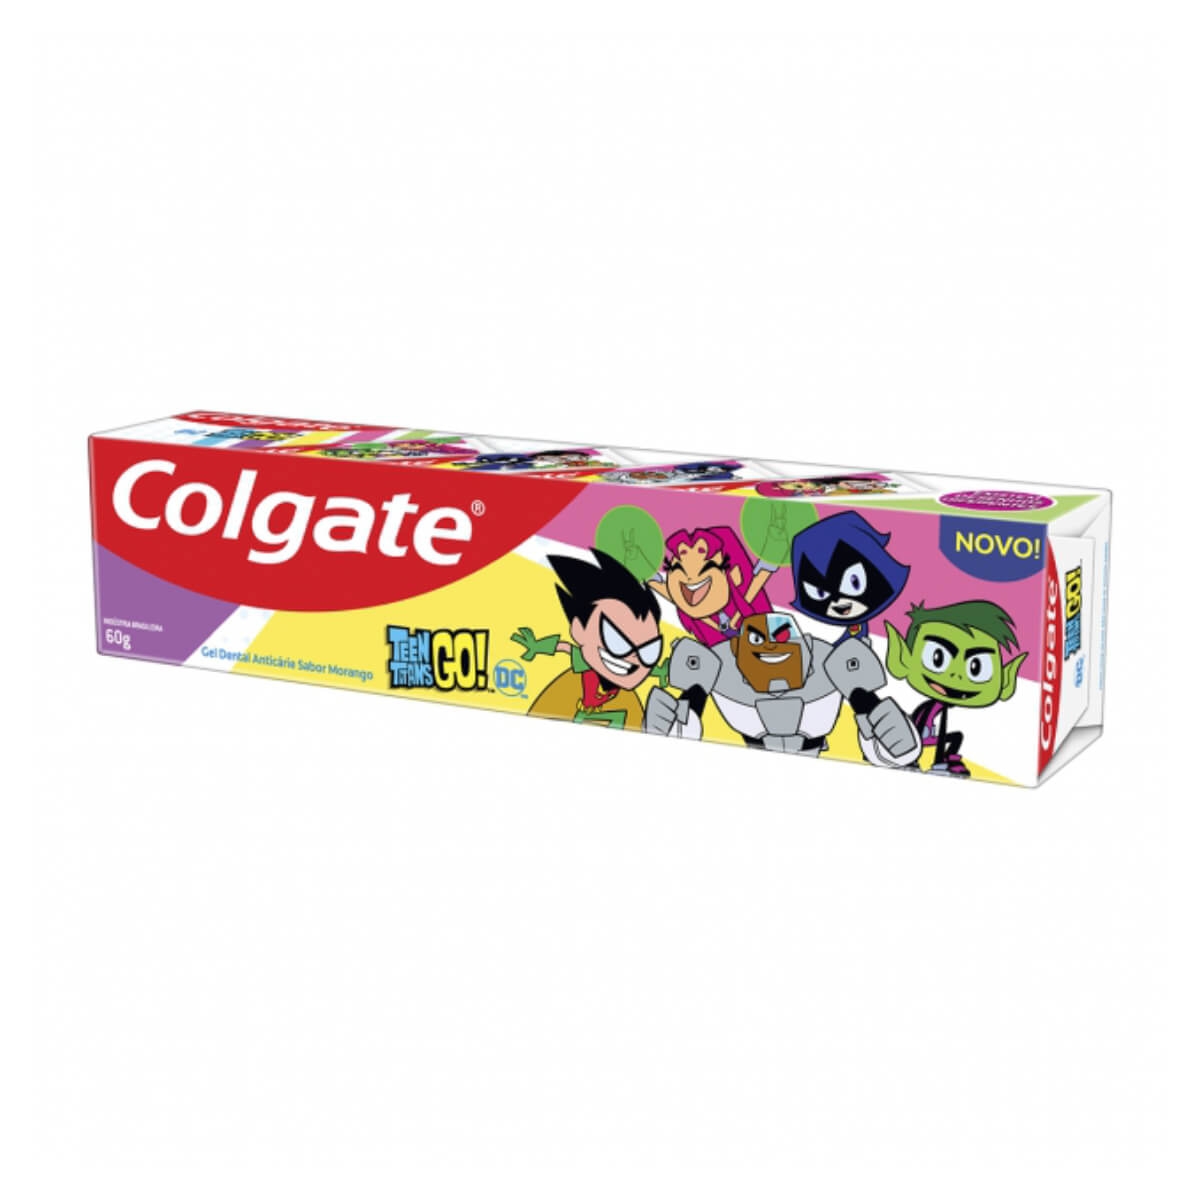 Gel Dental Colgate Teen Titans Go! 60g